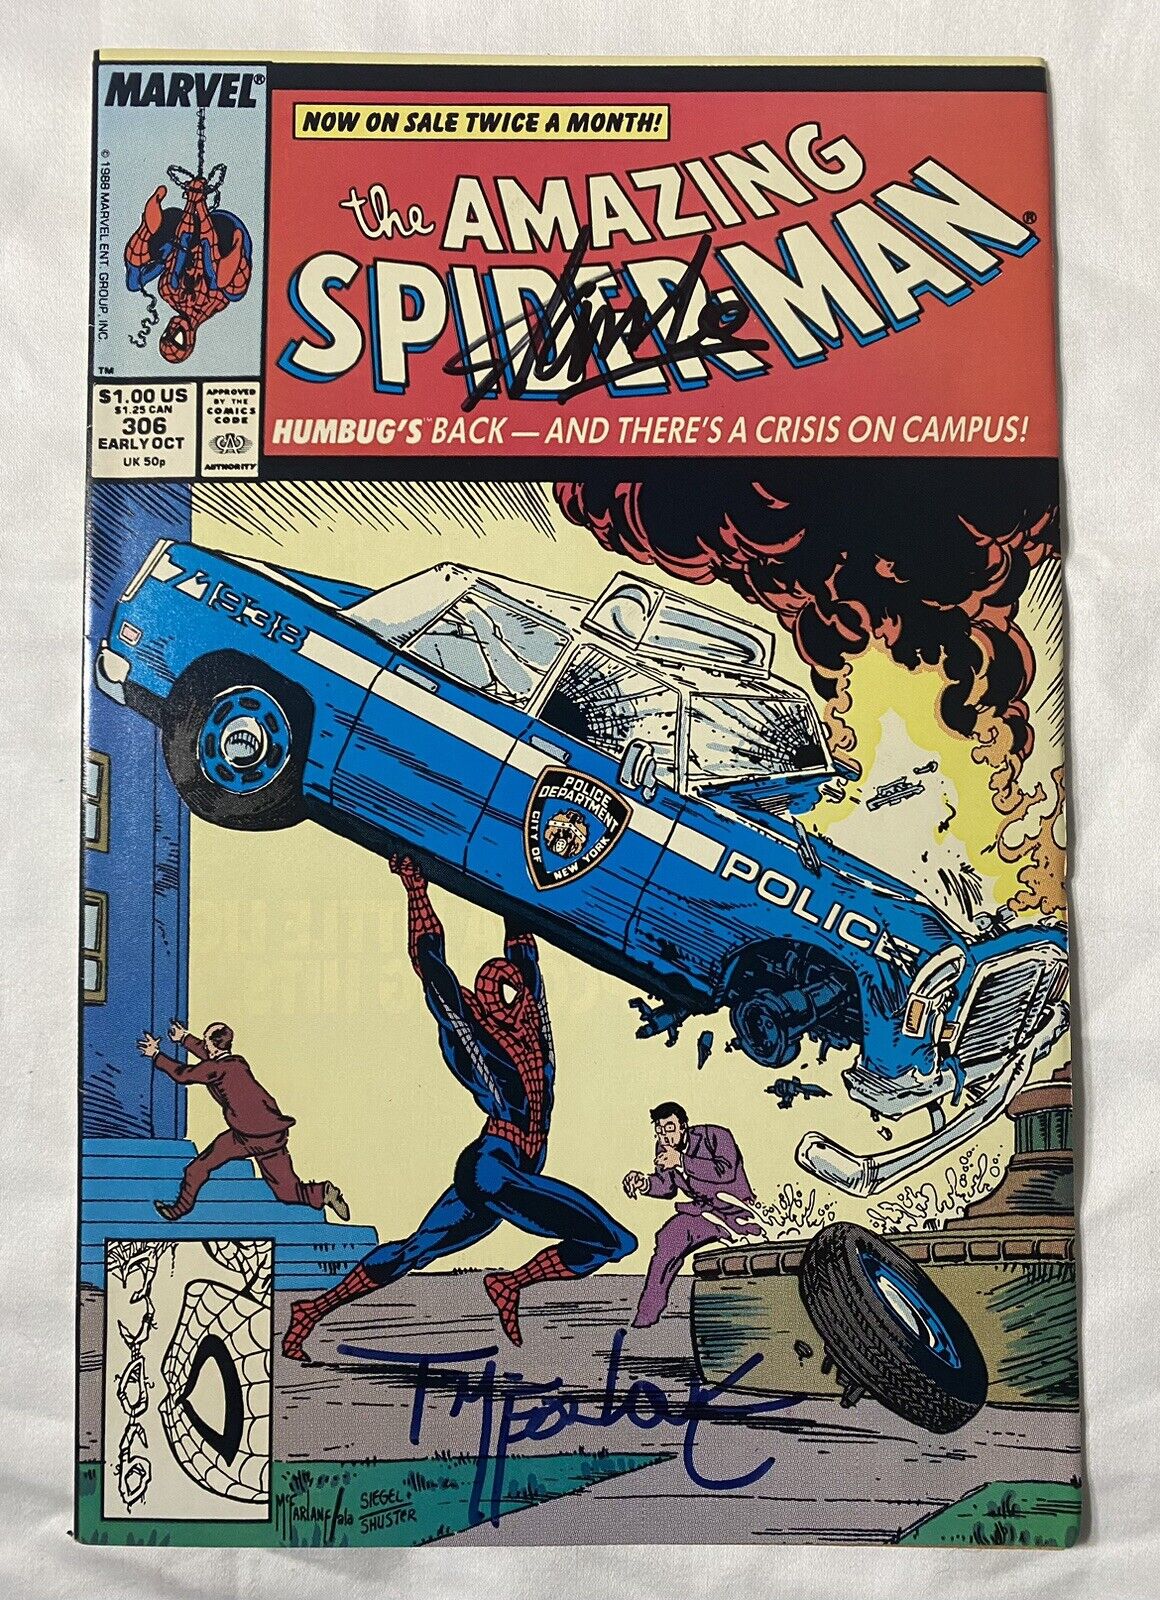 Amazing Spider-Man #306 Signed Stan Lee & Todd McFarlane Action Comics #1 Homage